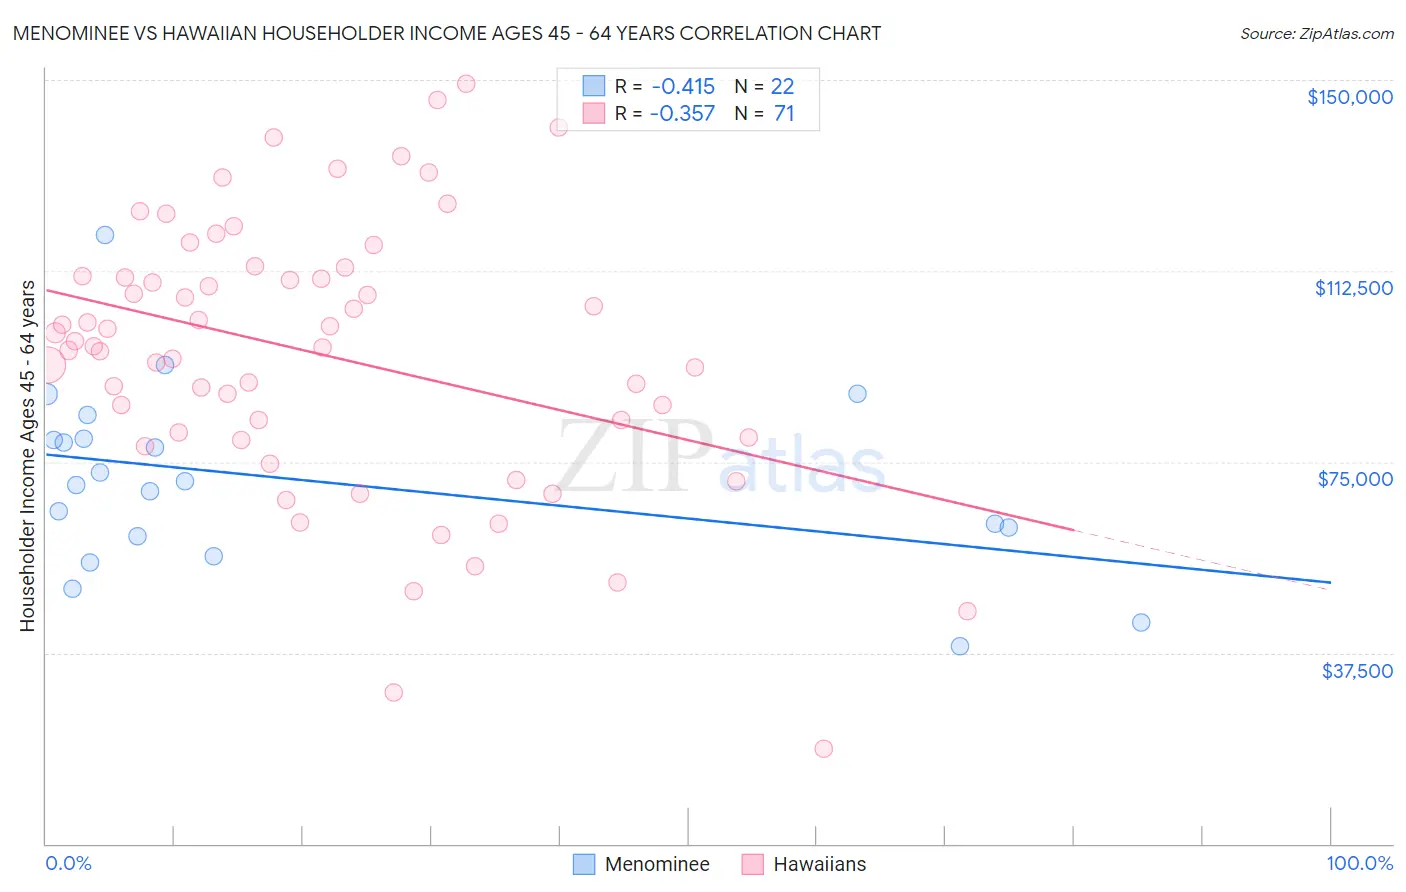 Menominee vs Hawaiian Householder Income Ages 45 - 64 years